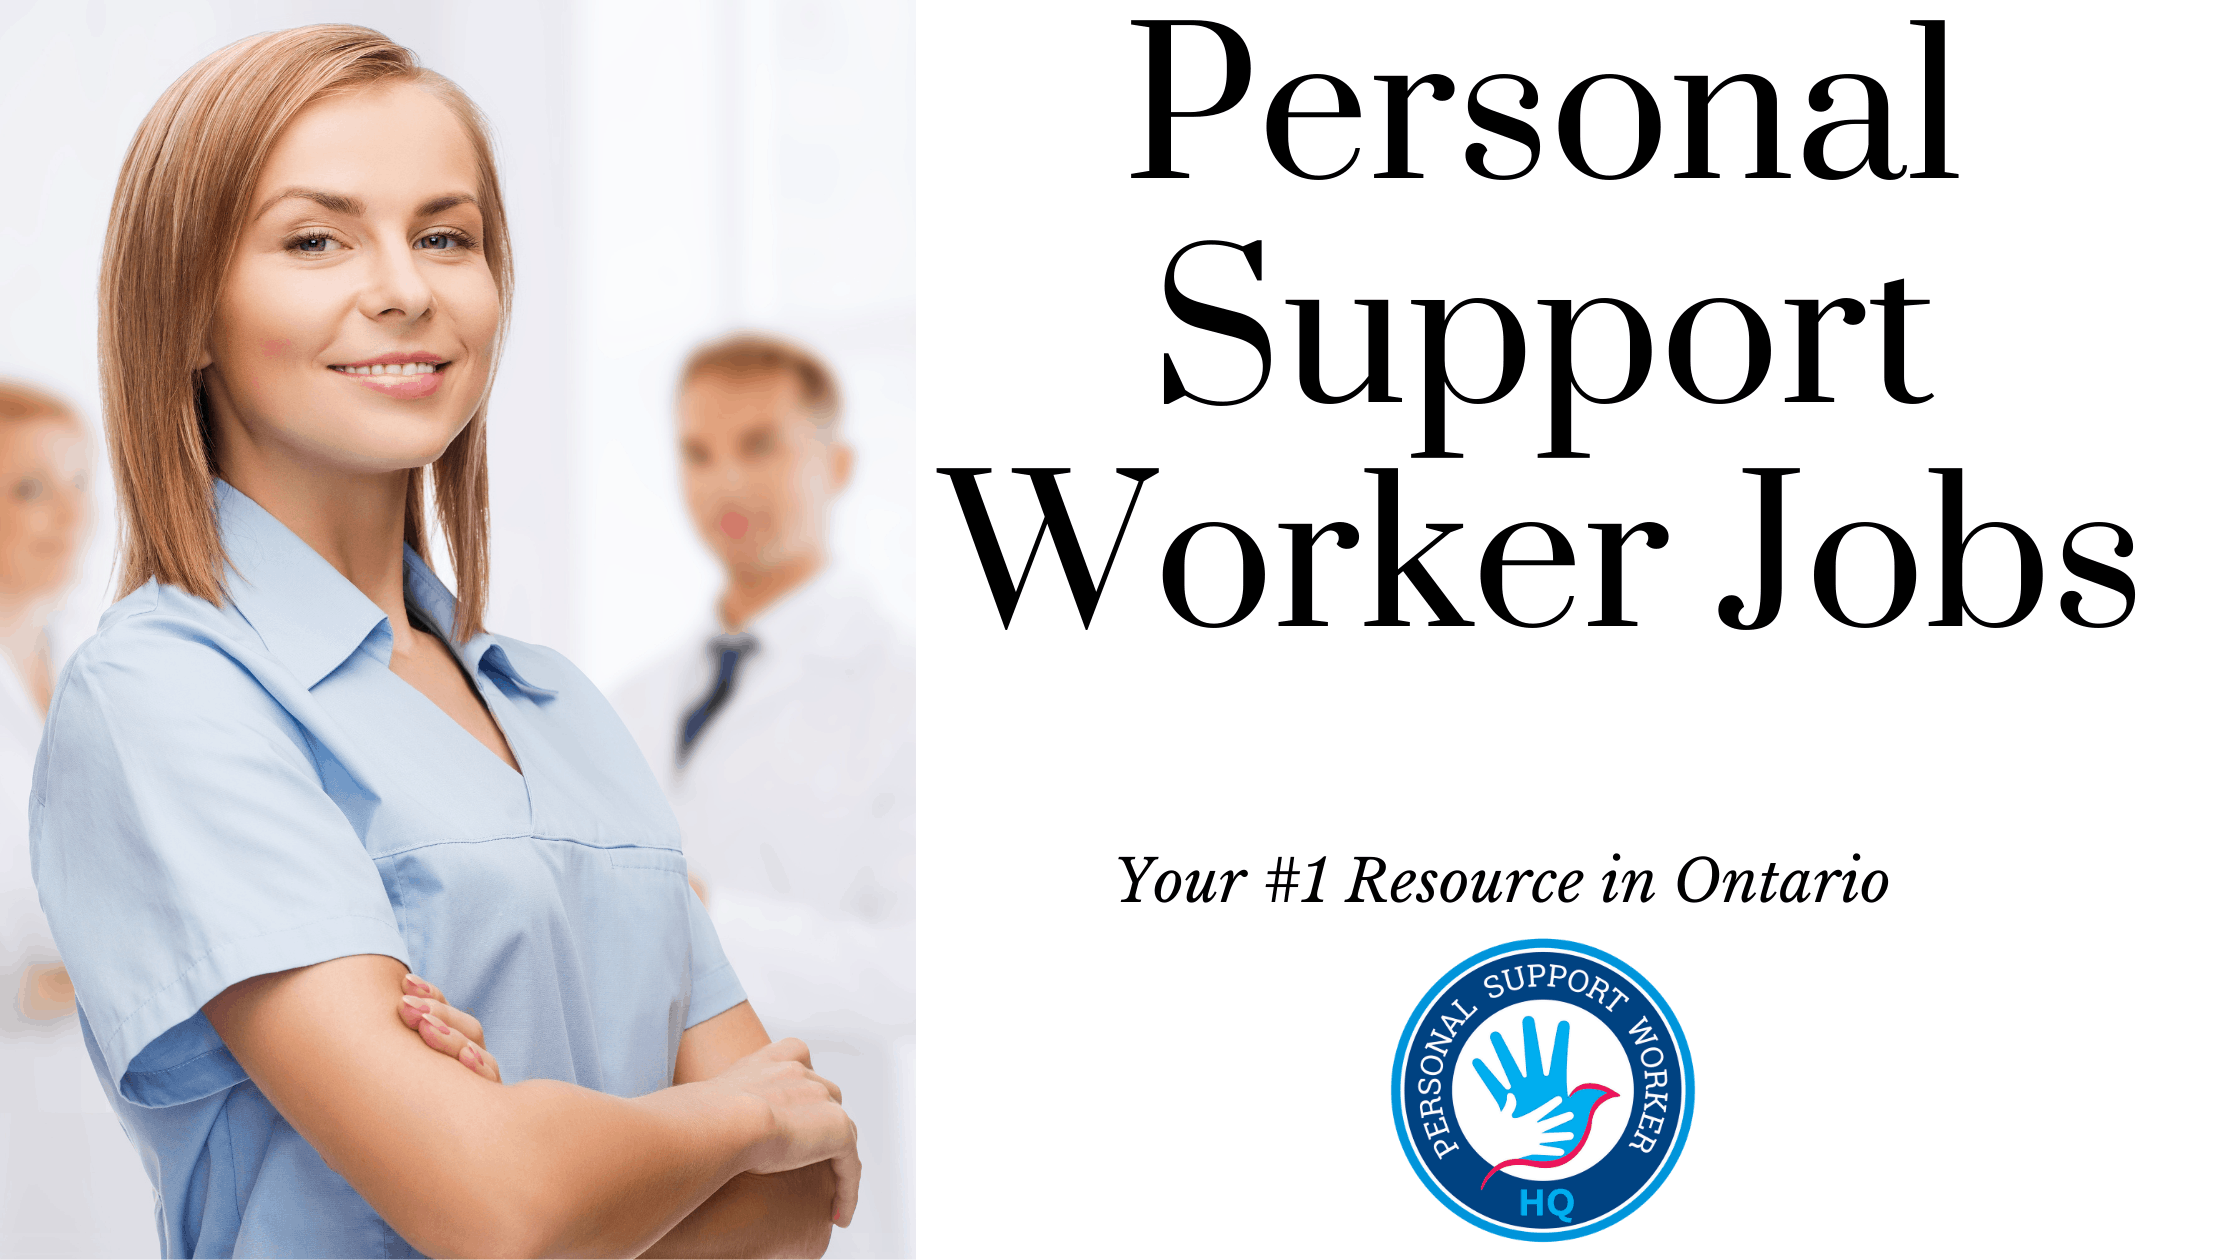 Personal Support Worker Jobs in Ontario.